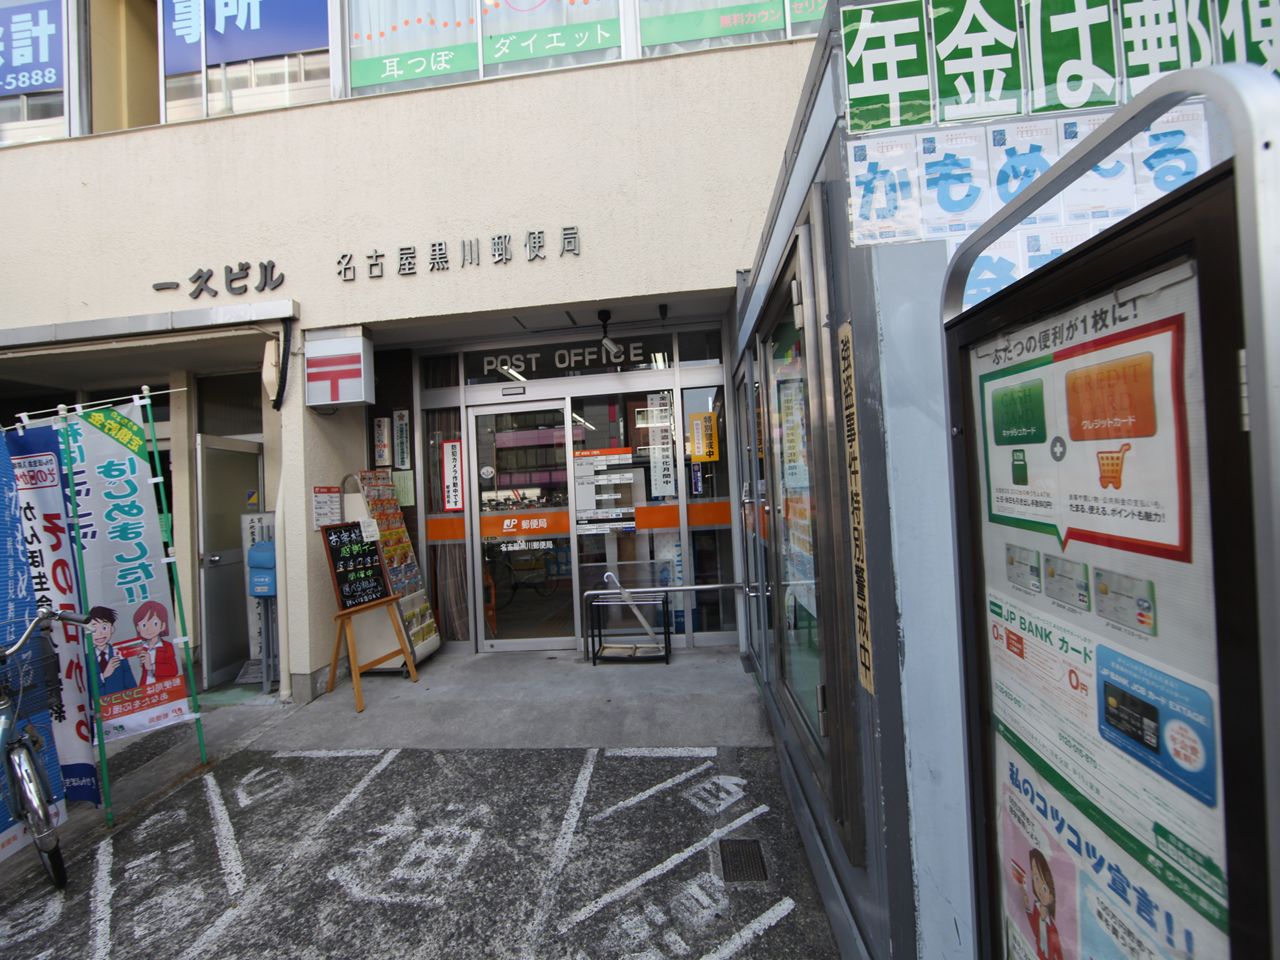 post office. 293m to Nagoya Kurokawa post office (post office)